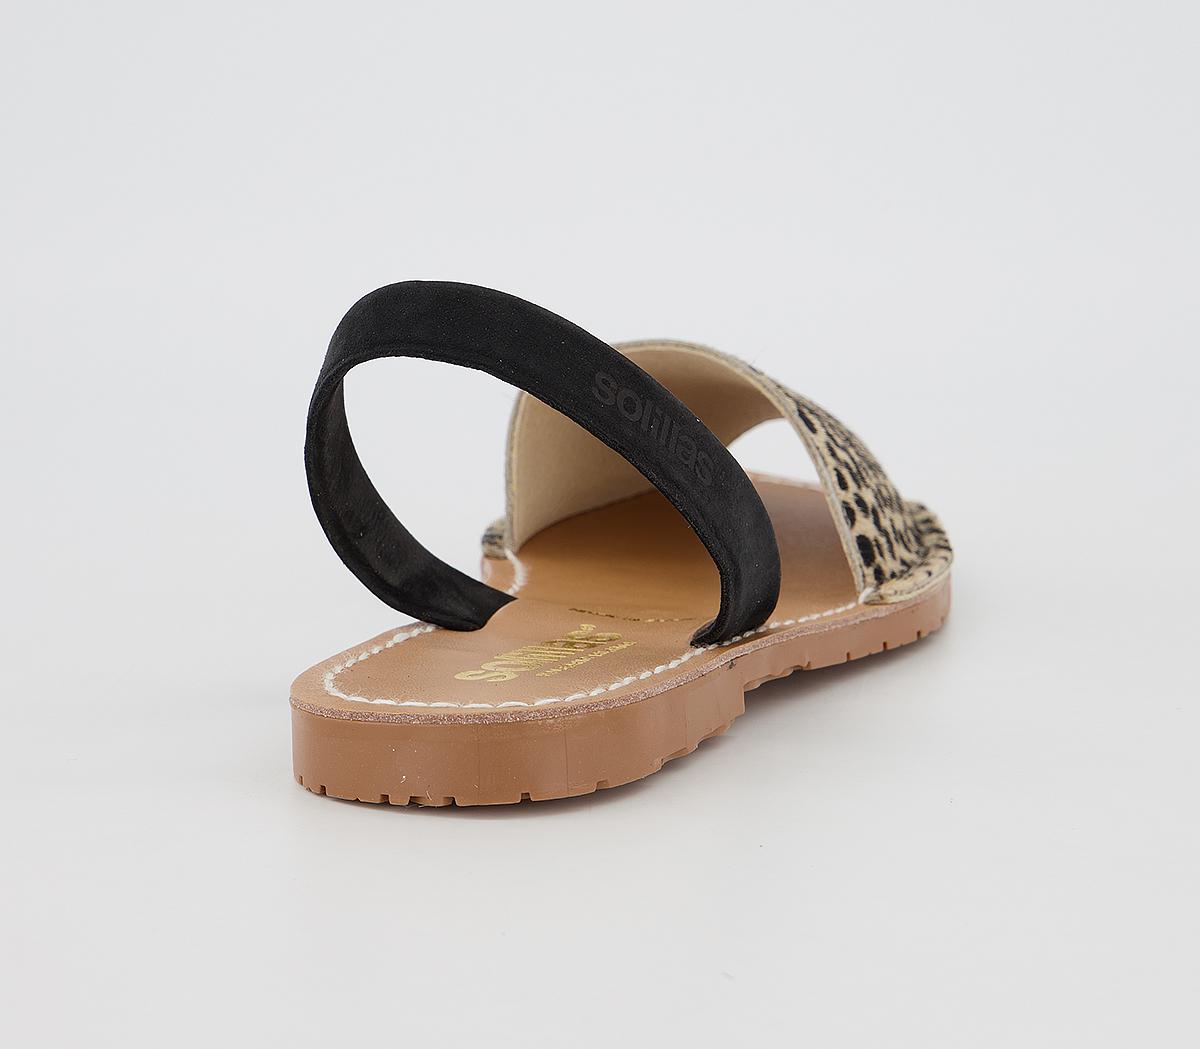 Solillas Solillas Sandals Leopard - Women’s Sandals